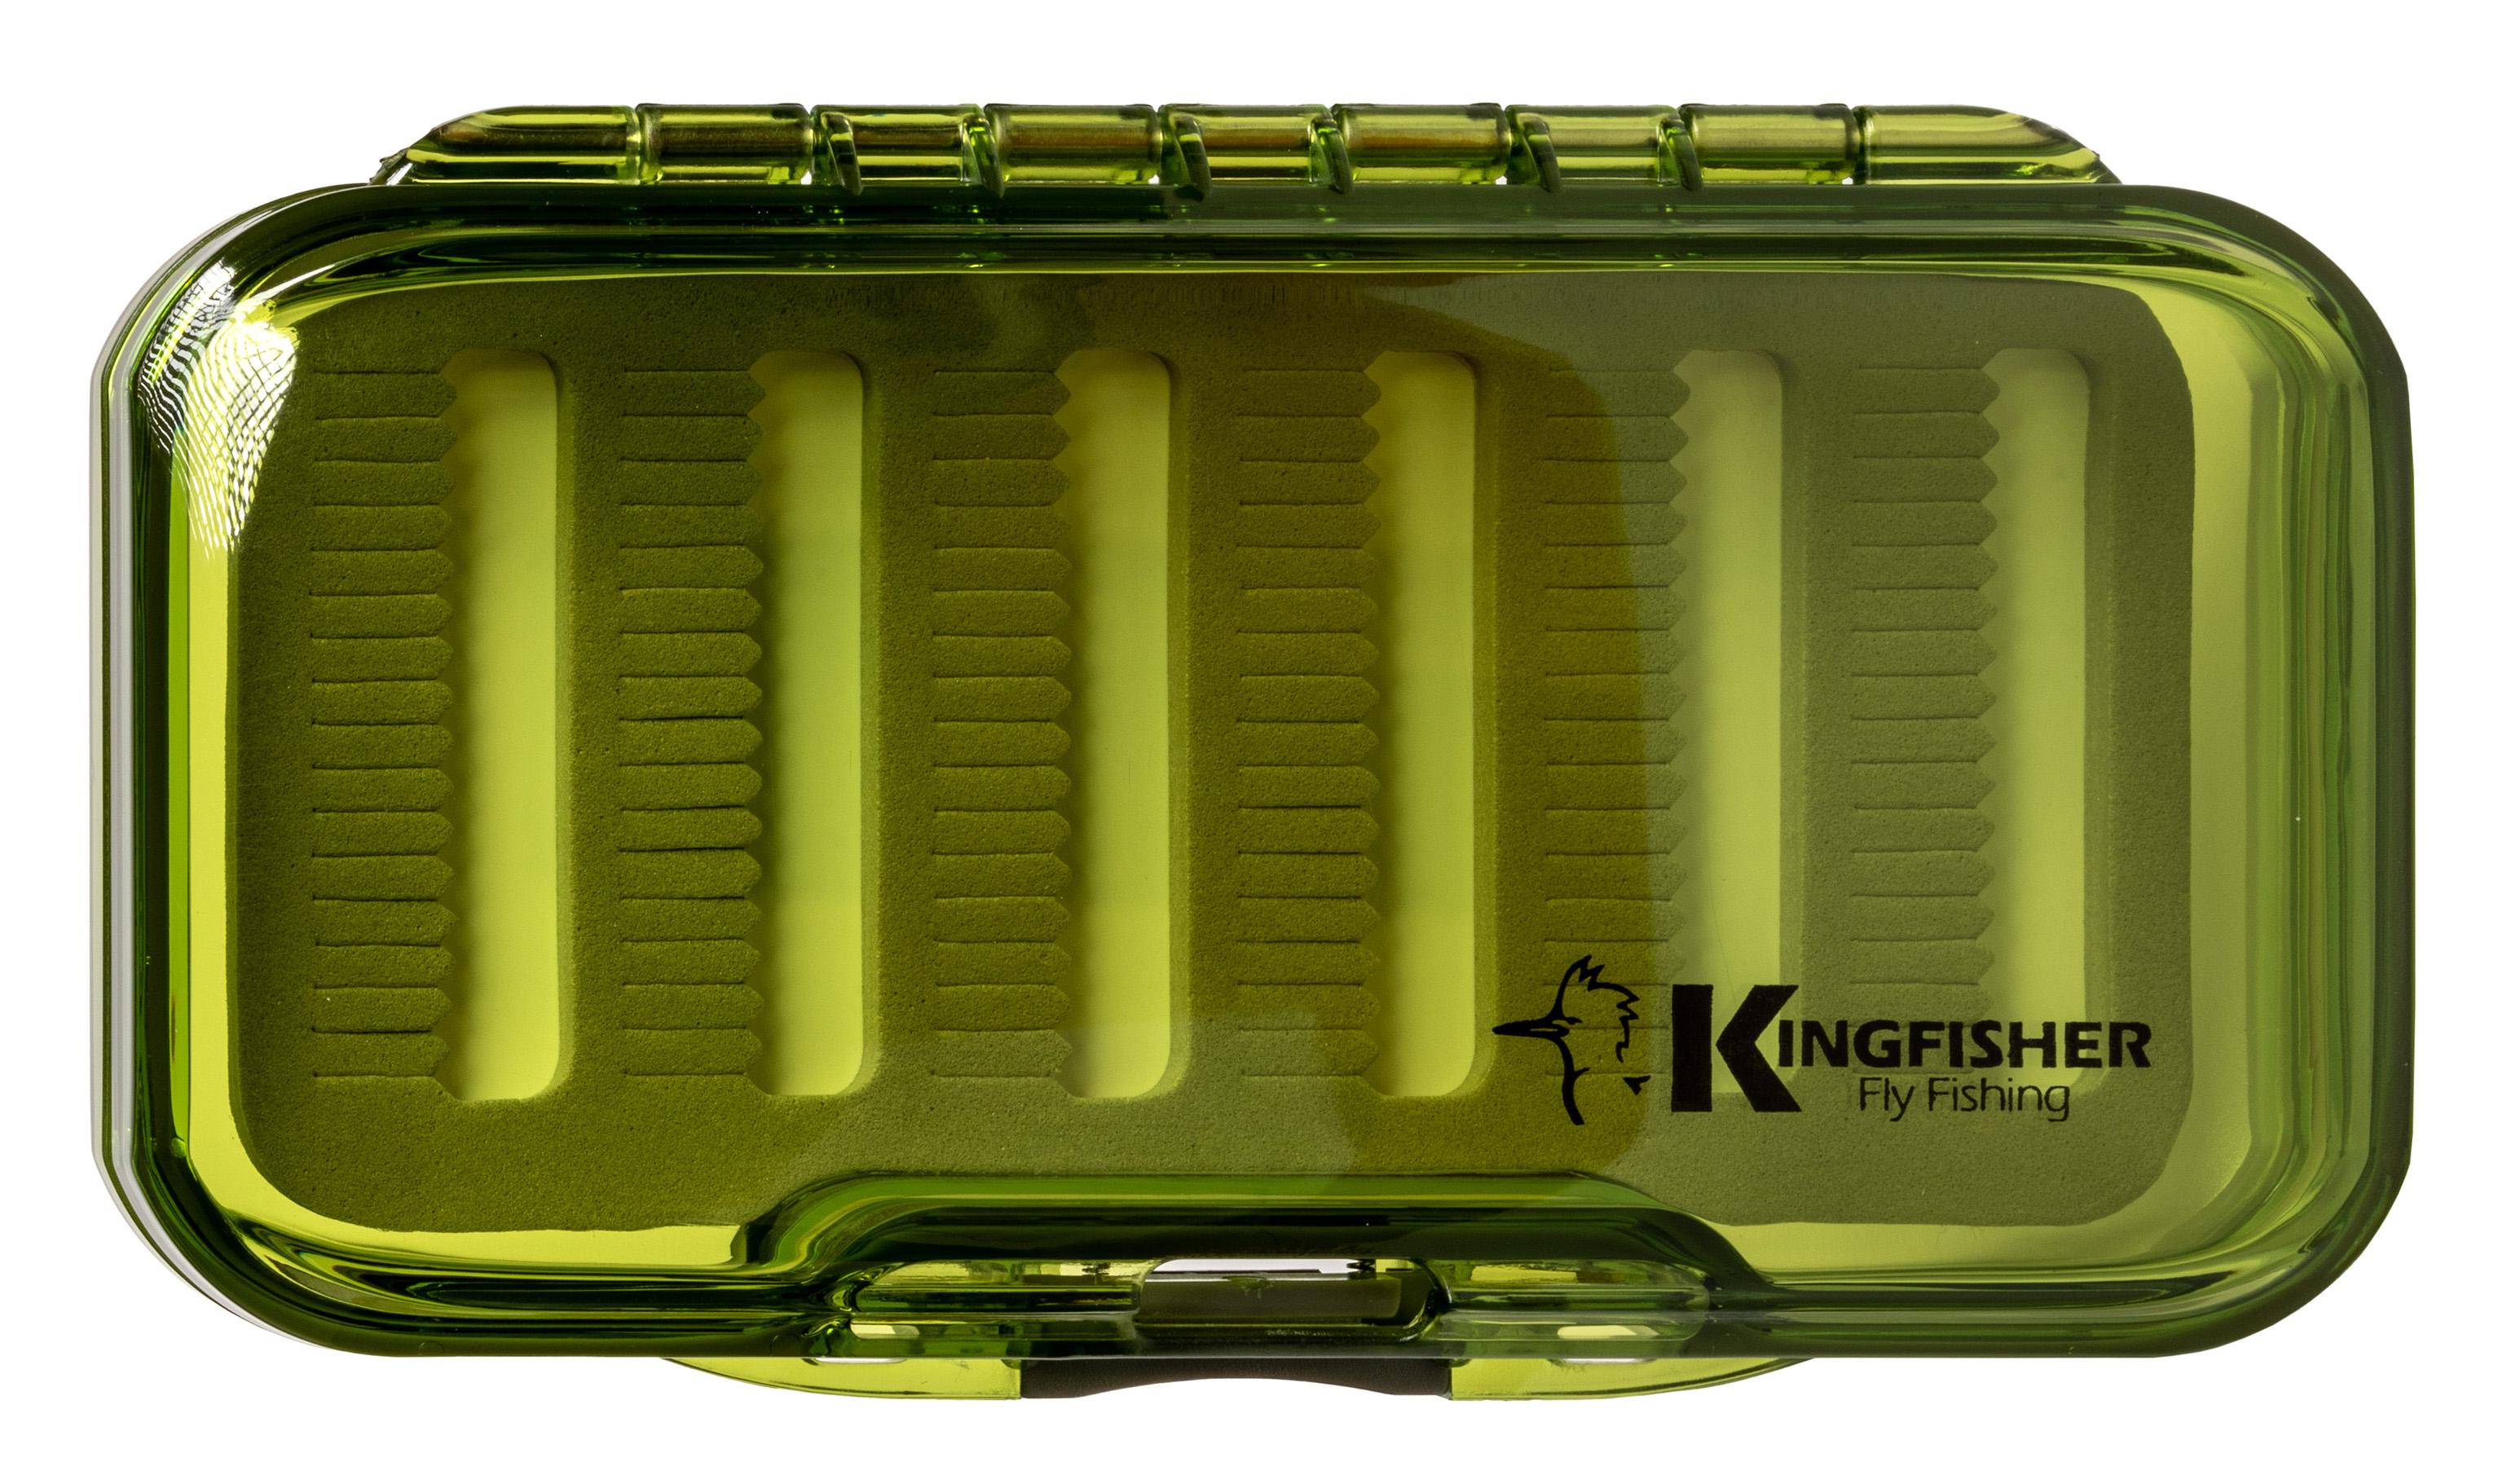 Kingfisher - Fly Fishing Fly Storage Box